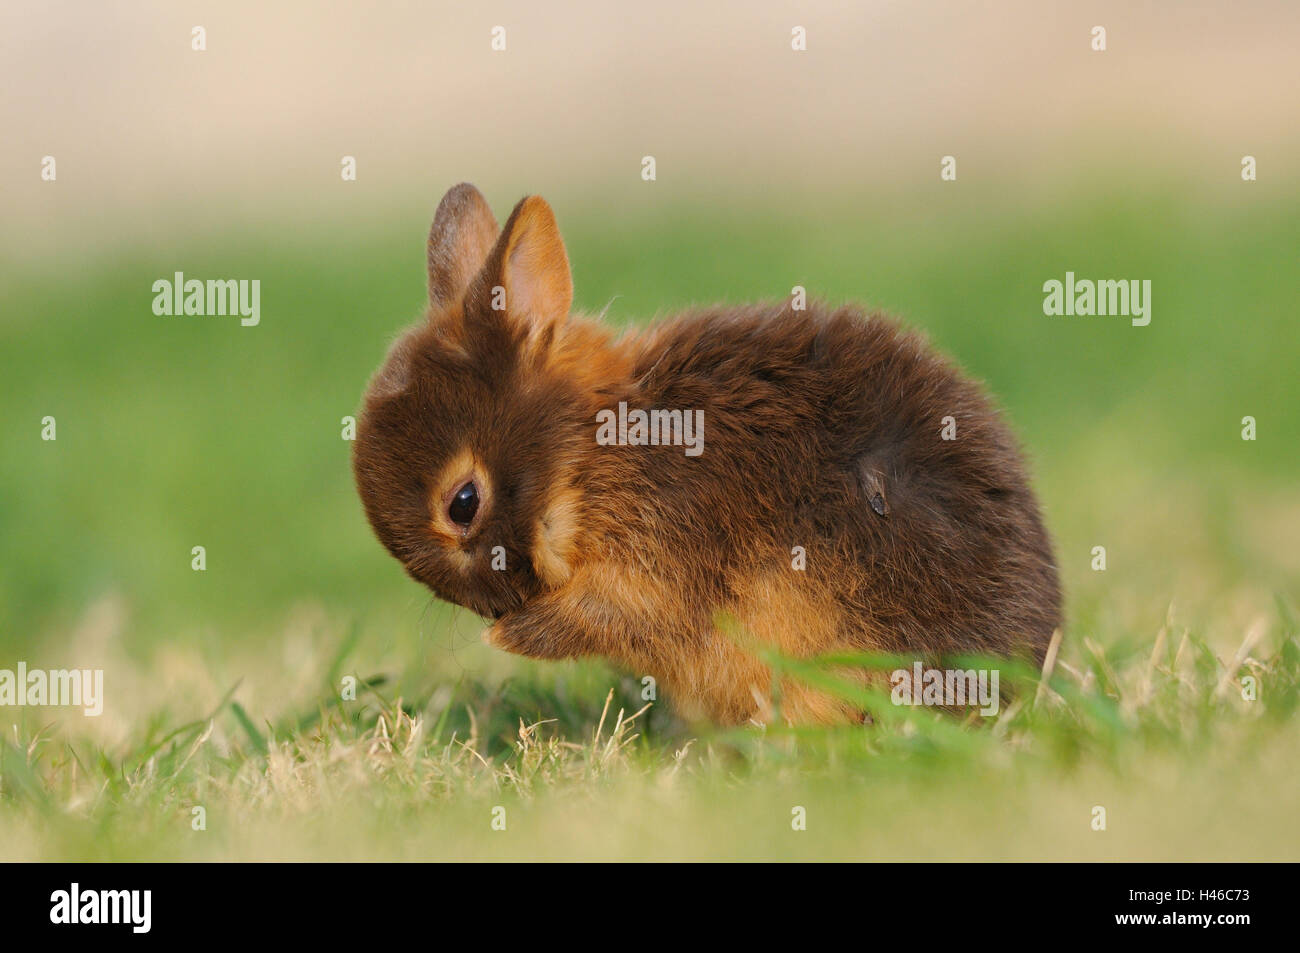 Rabbit, Netherland dwarf 'Havanna Loh', young animal, side view, meadow, sitting, grooming, Stock Photo